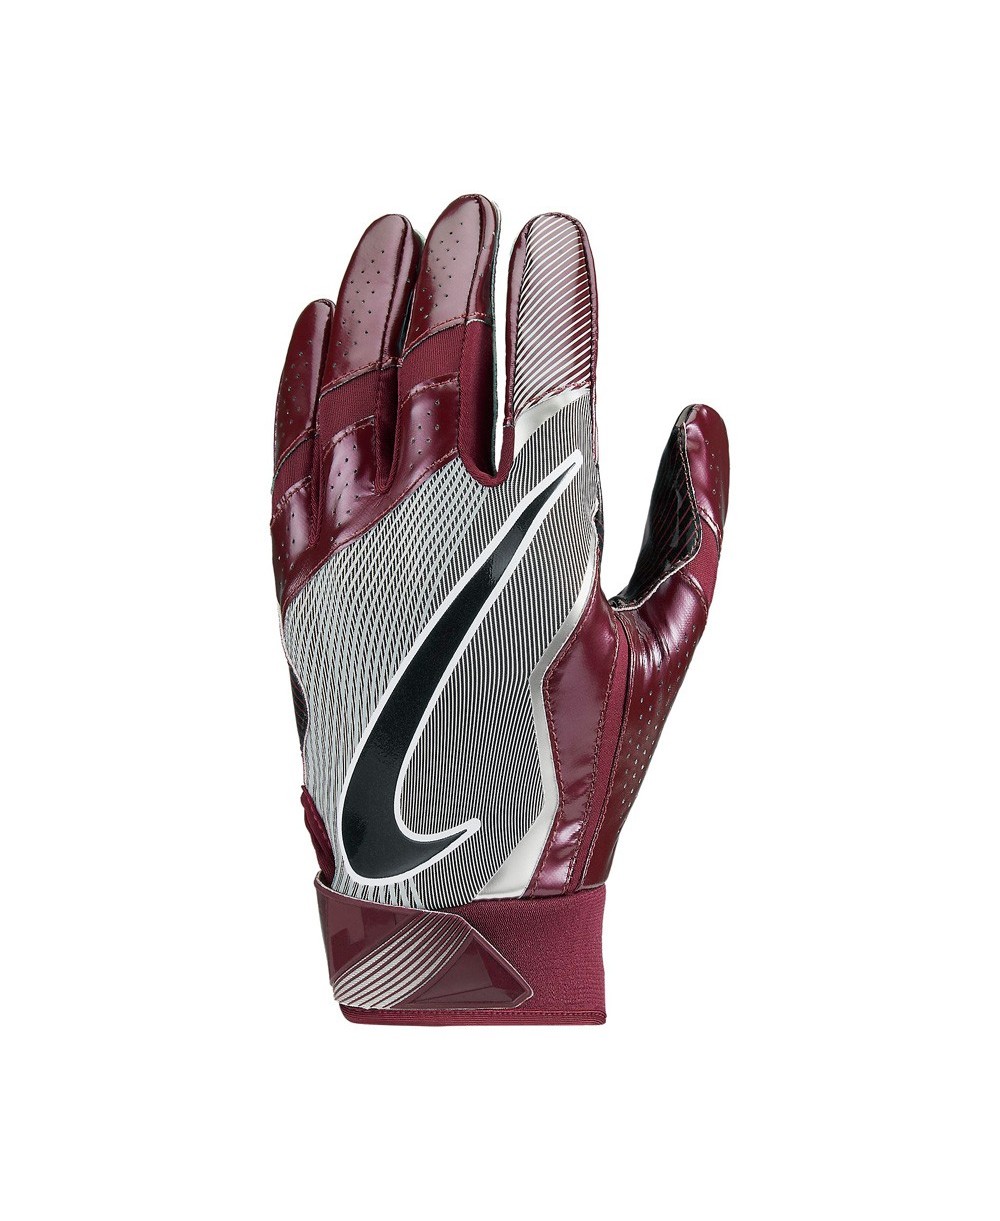 vapor jet 4.0 football gloves